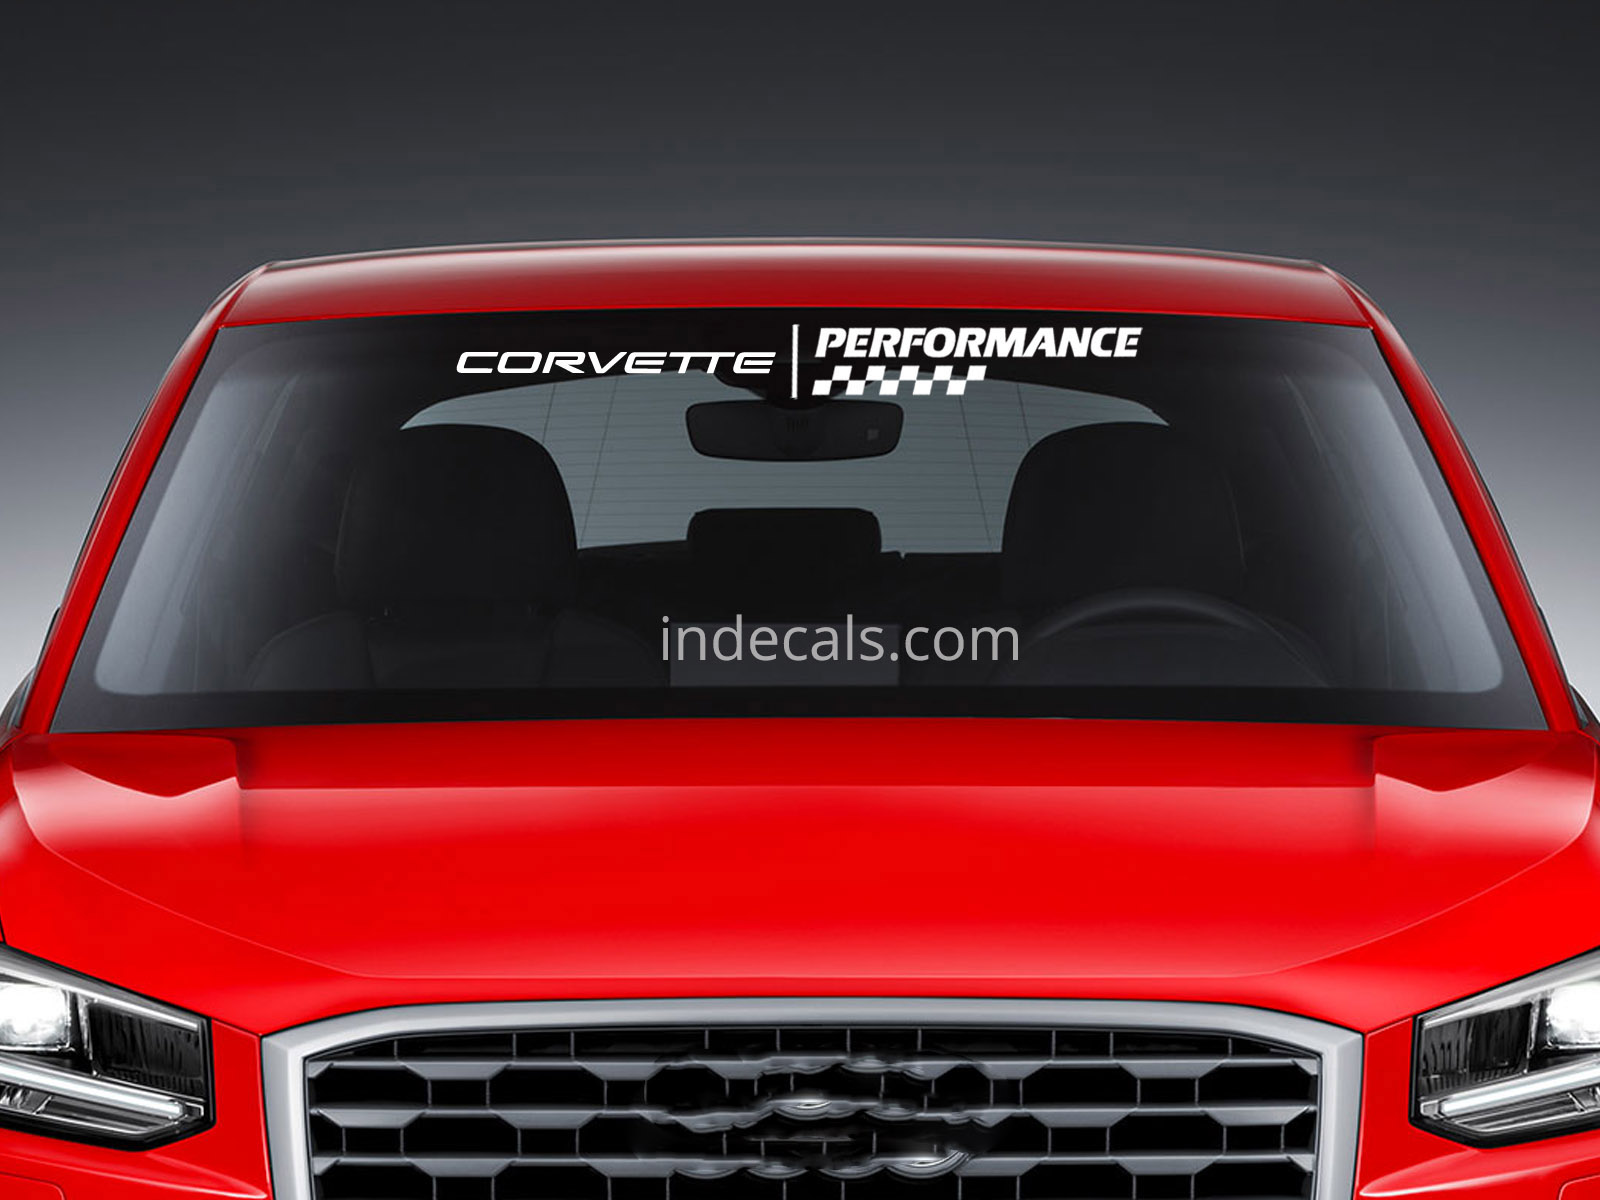 1 x Corvette Performance Sticker for Windshield or Back Window - White